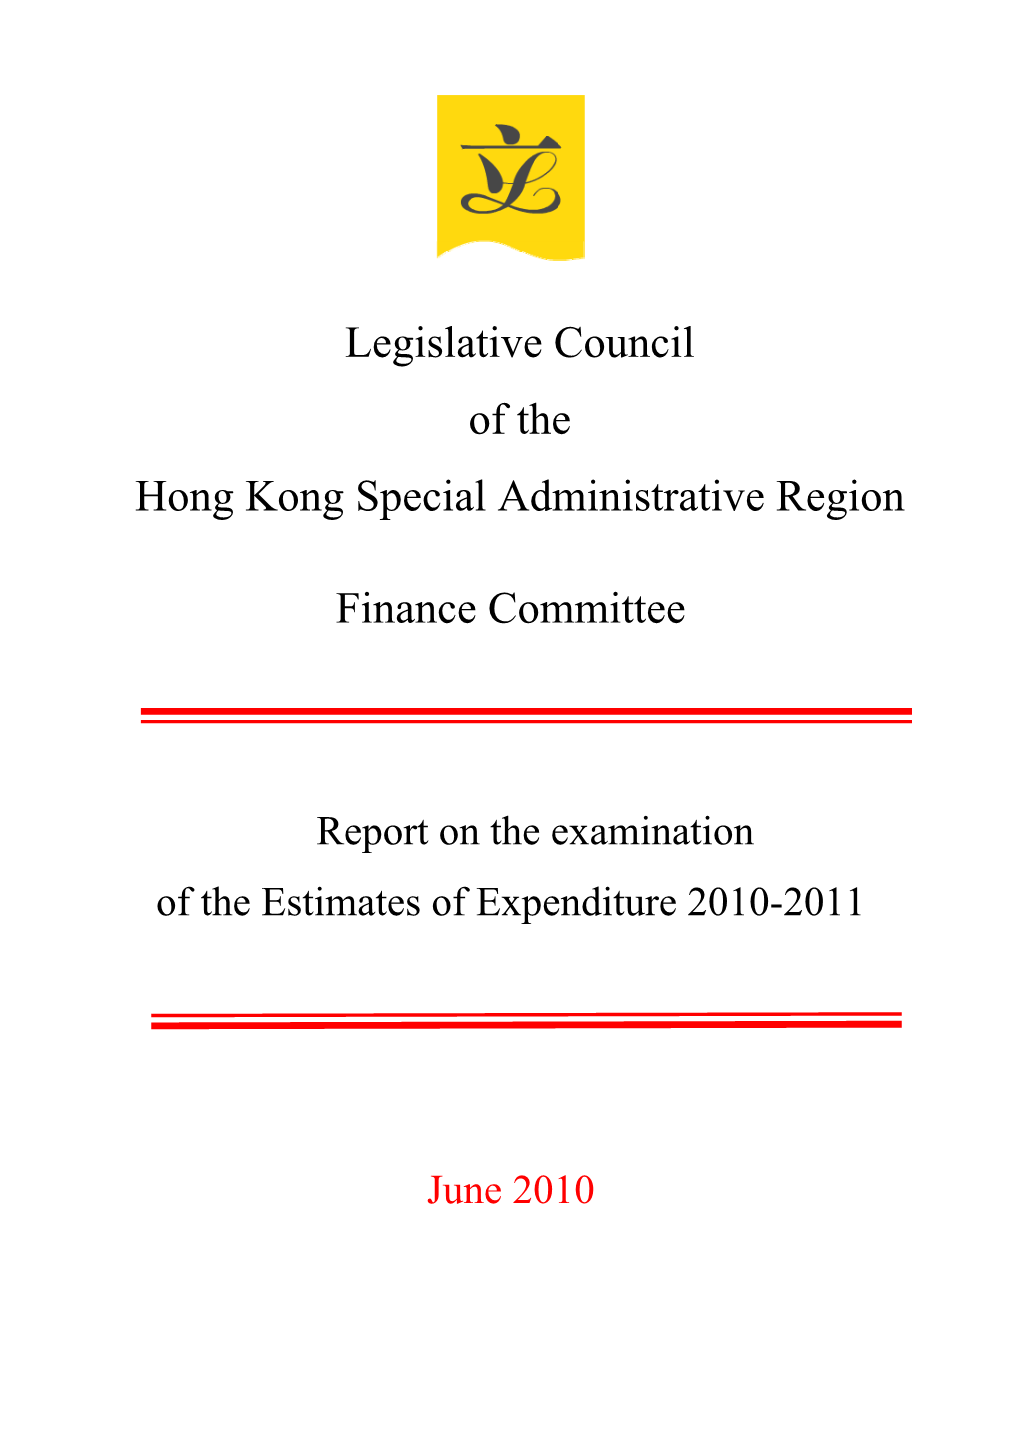 Legislative Council of the Hong Kong Special Administrative Region